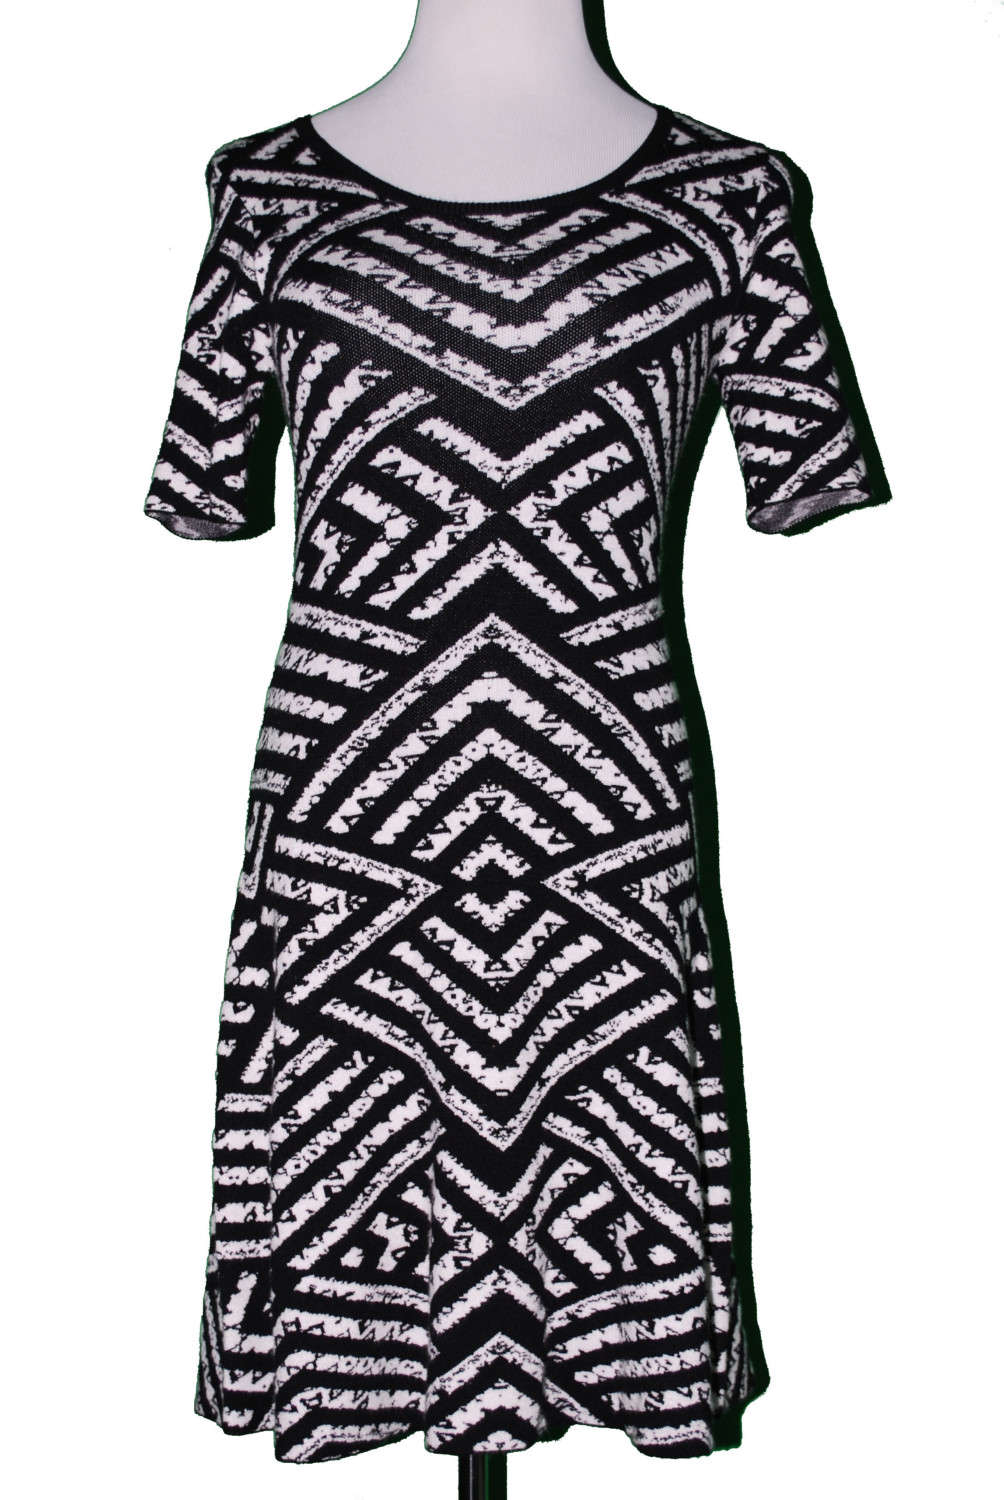 Bar III Dress - Original Retail: $79, CWS: $20 - Charlotte Warehouse Sale